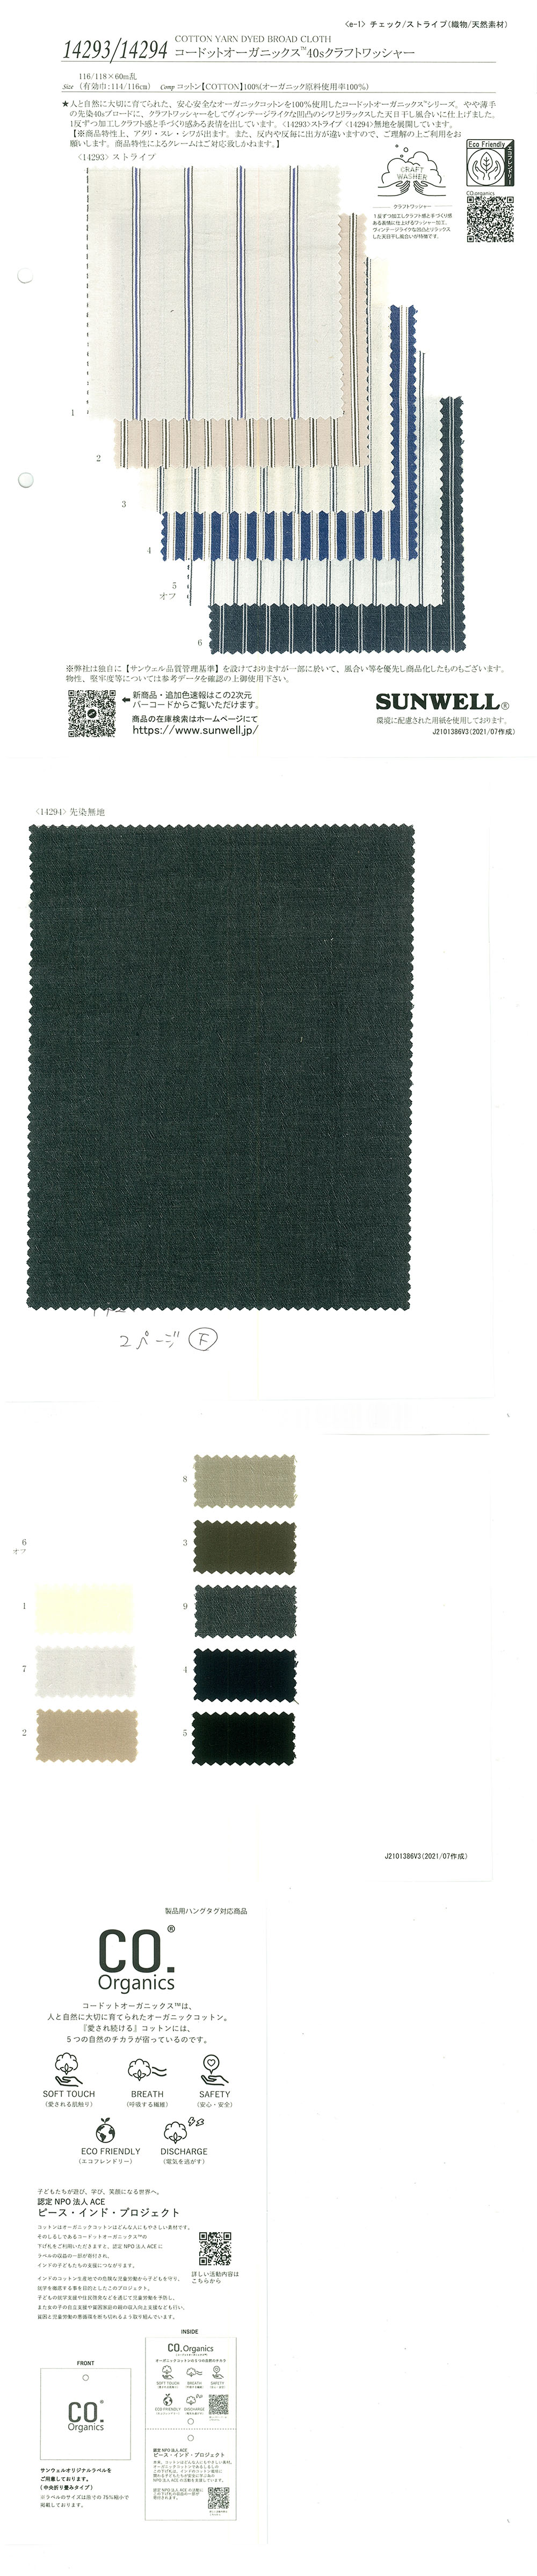 14293 Cordot Organics (R) 40 Single Thread Craft Stripe[Textile / Fabric] SUNWELL